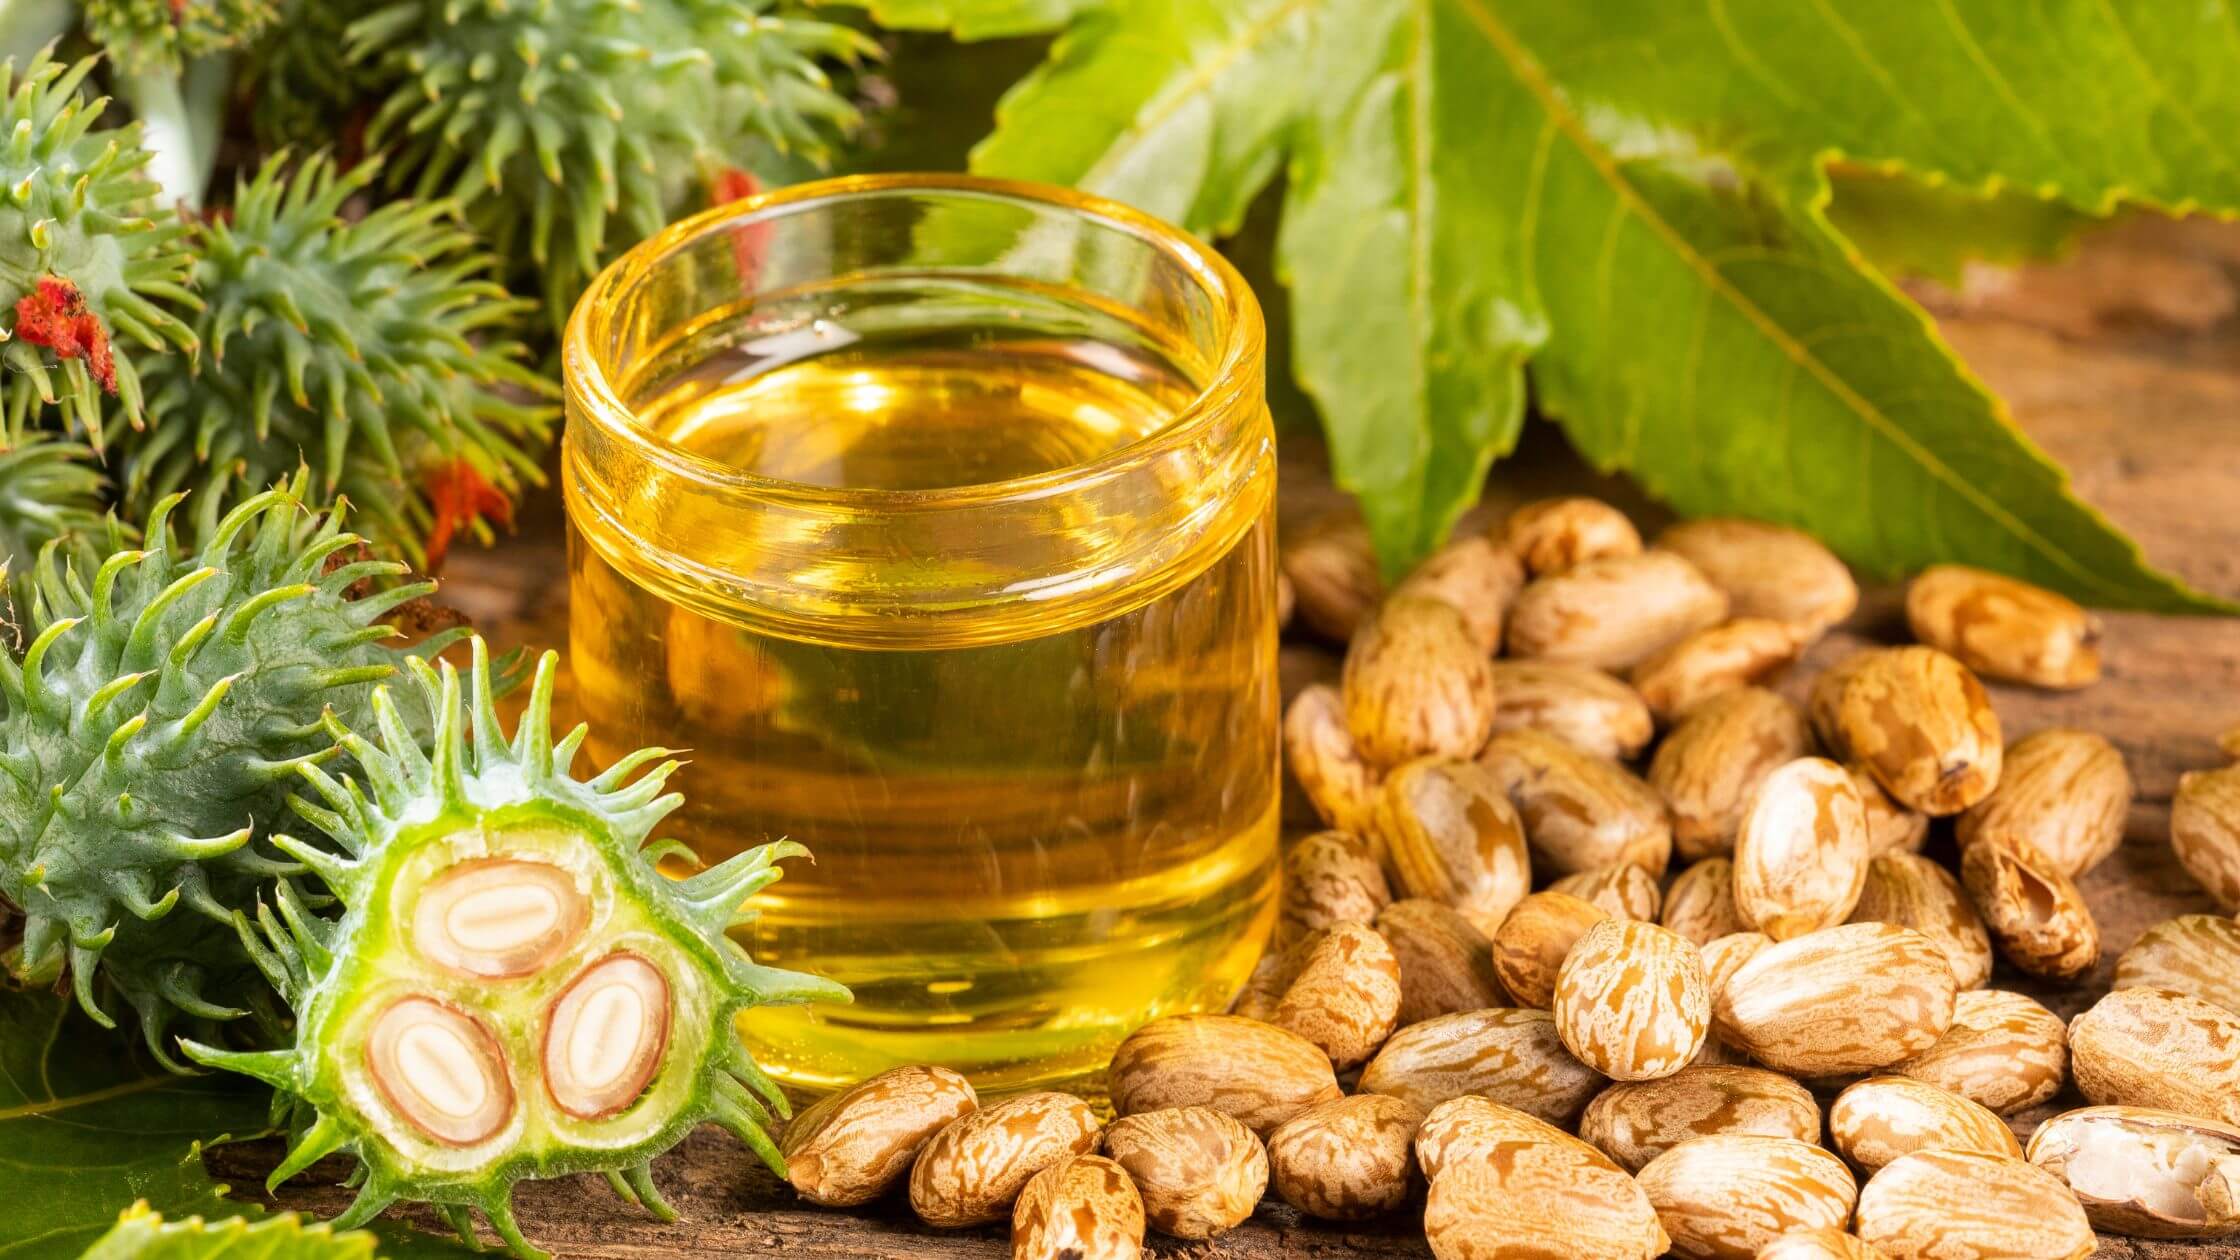 castor oil packs as natural management to support hormones